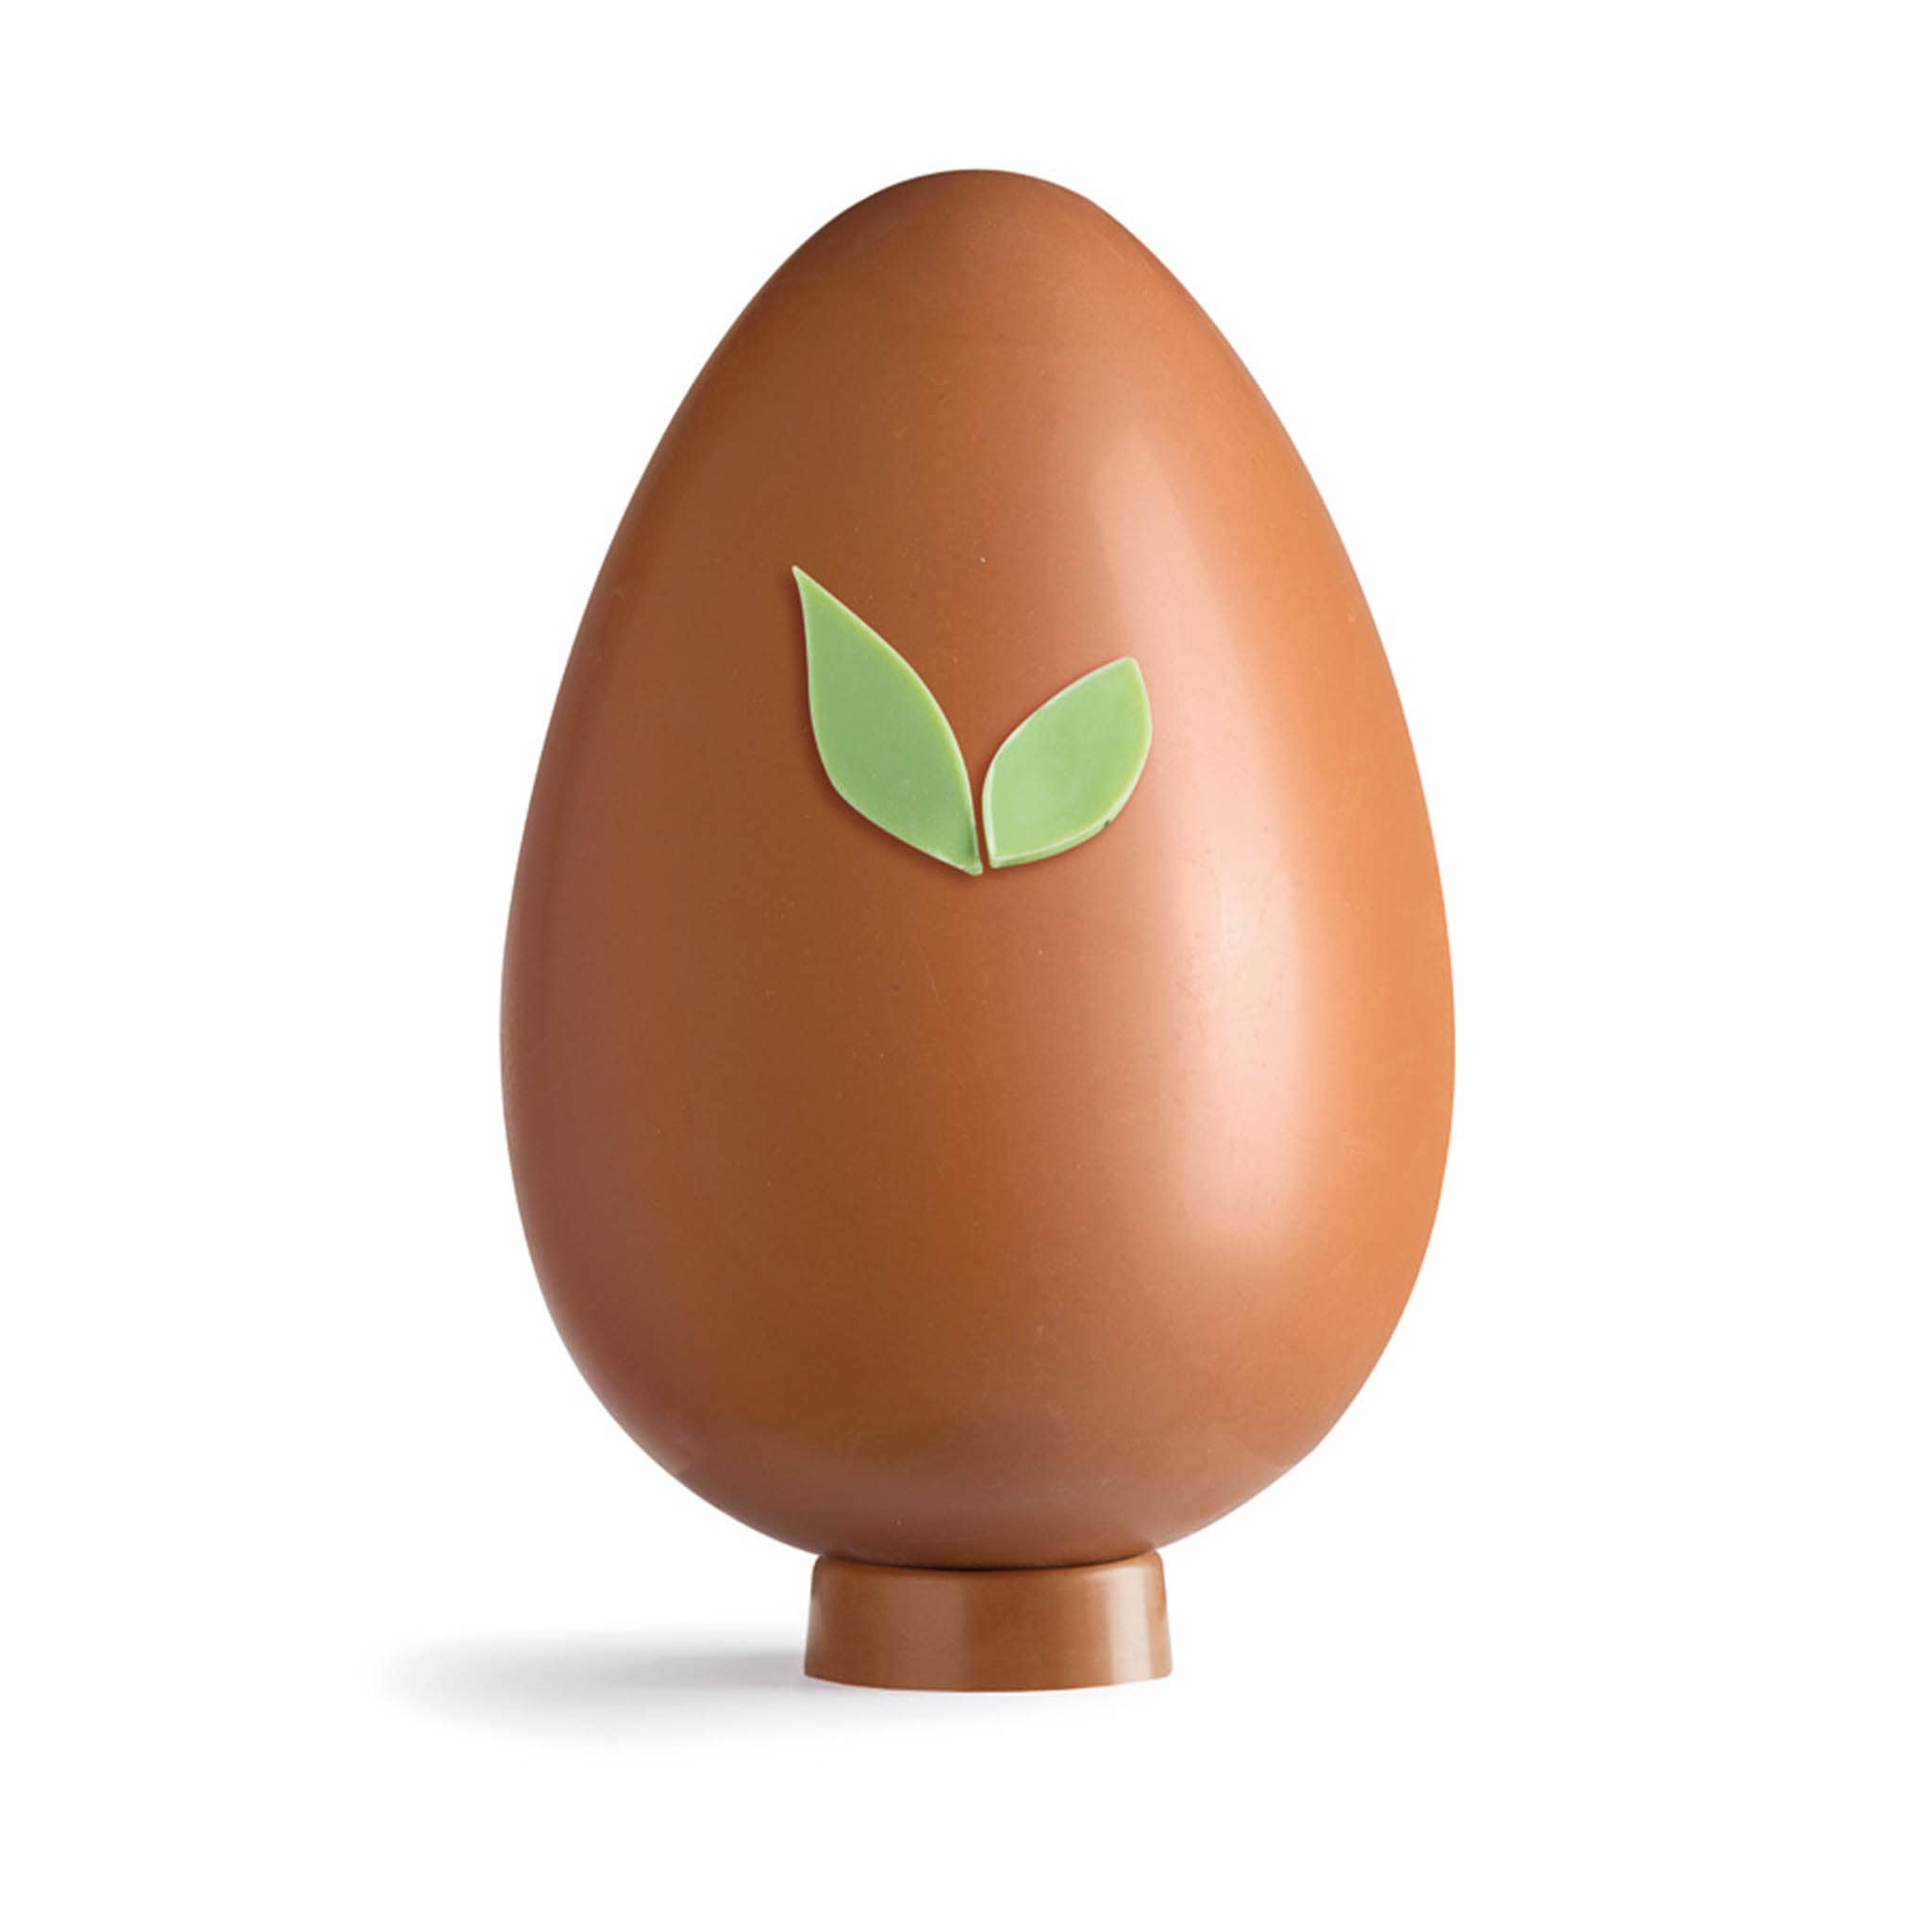 La Perla di Torino Vegan Coconut Milk Chocolate Easter Egg, 200g